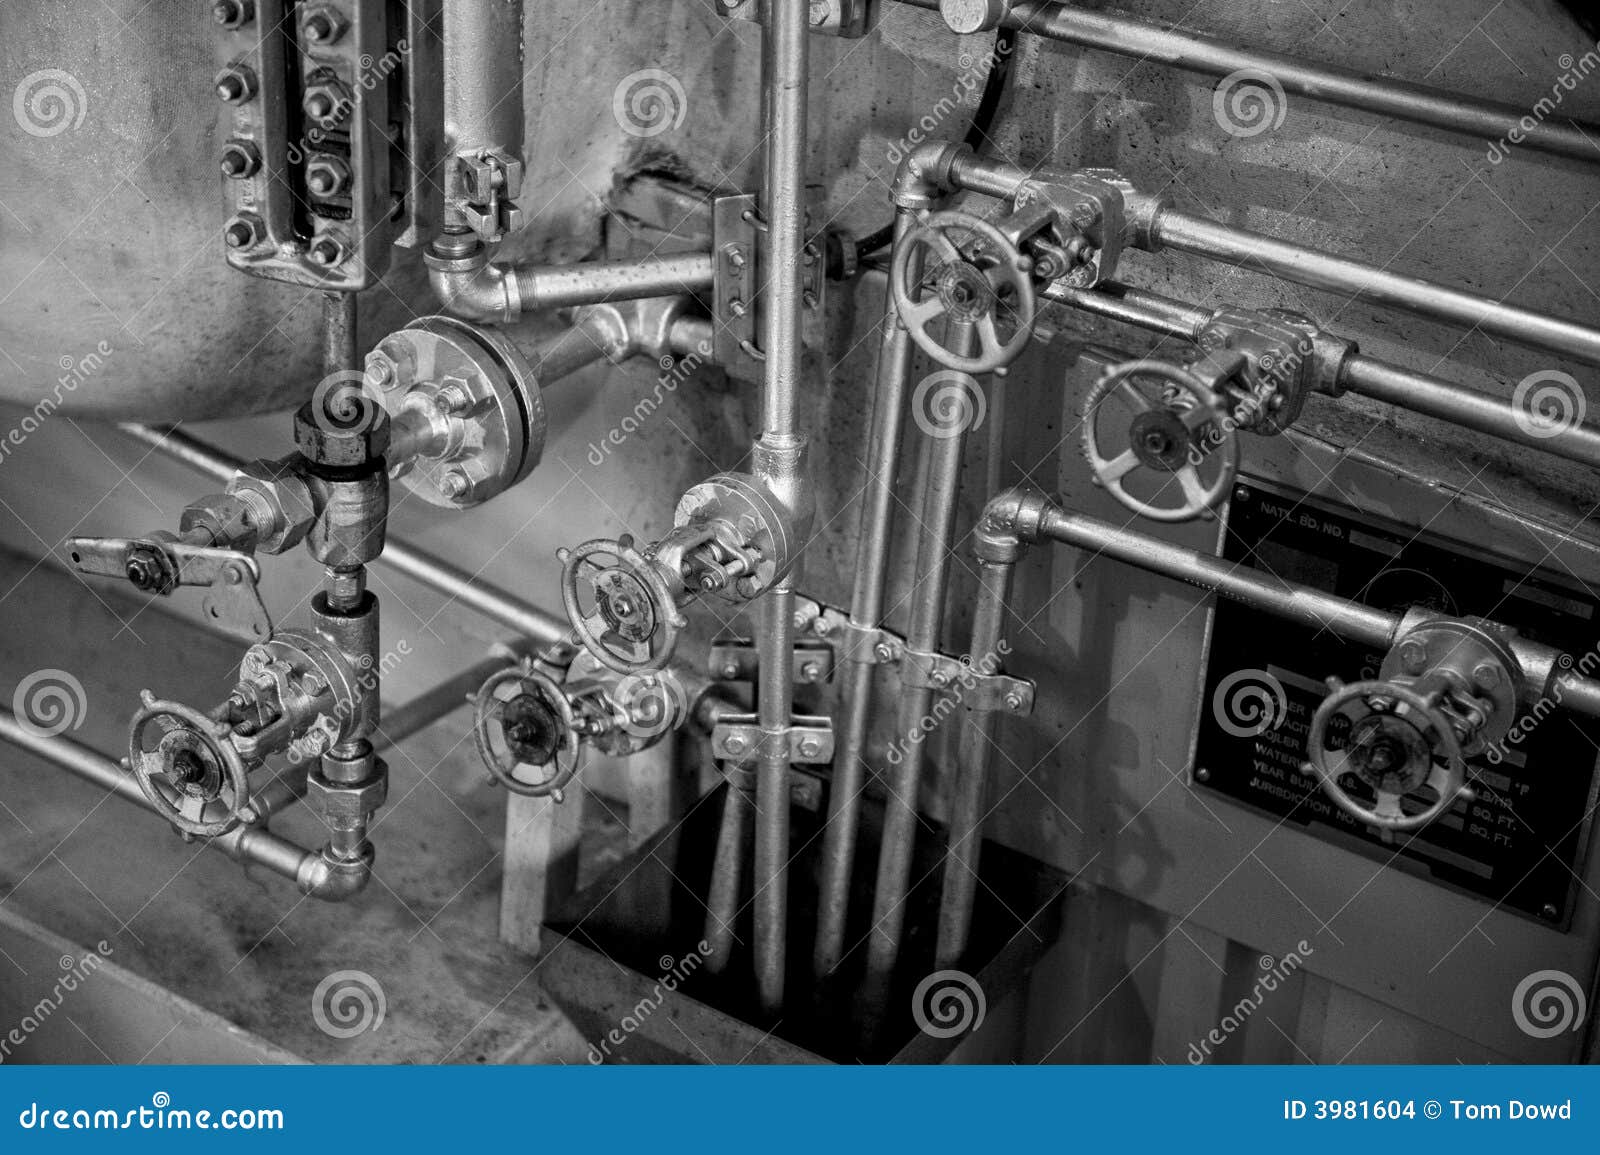 steamship boiler and valves